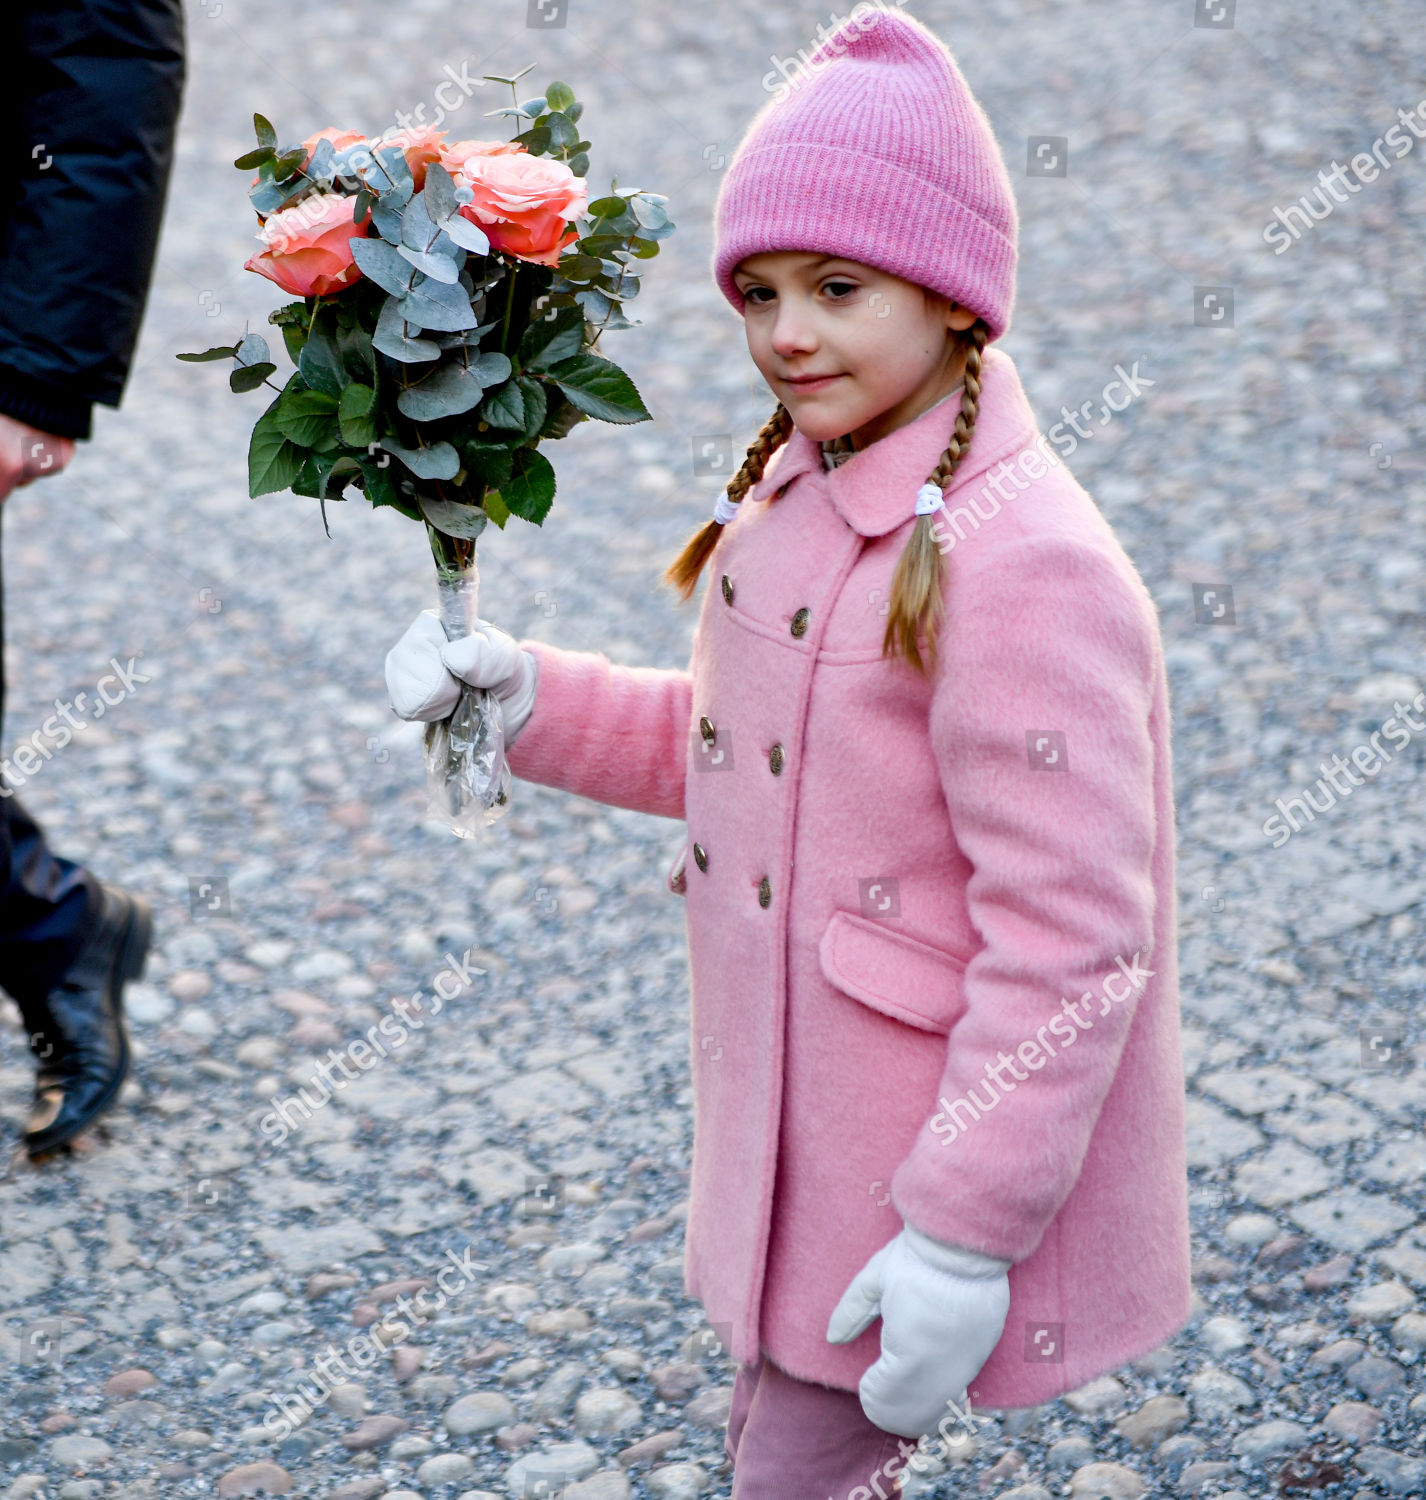 crown-princess-victoria-name-day-celebrations-stockholm-sweden-shutterstock-editorial-10151870t.jpg